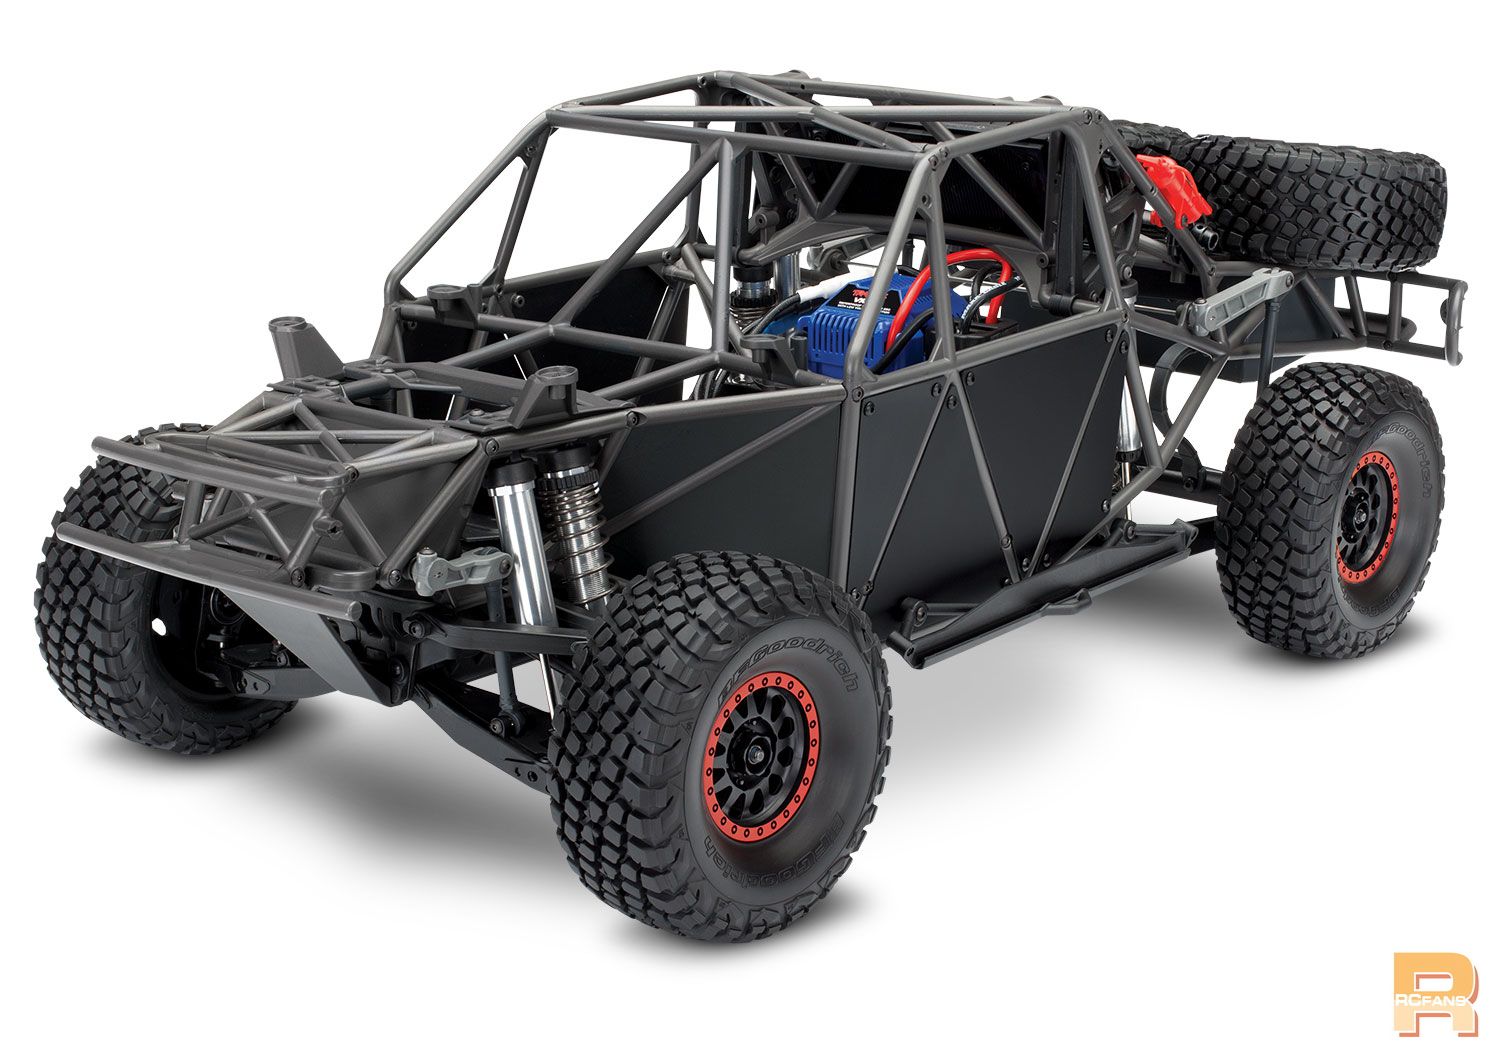 chassis-3qtr-rigid.jpg